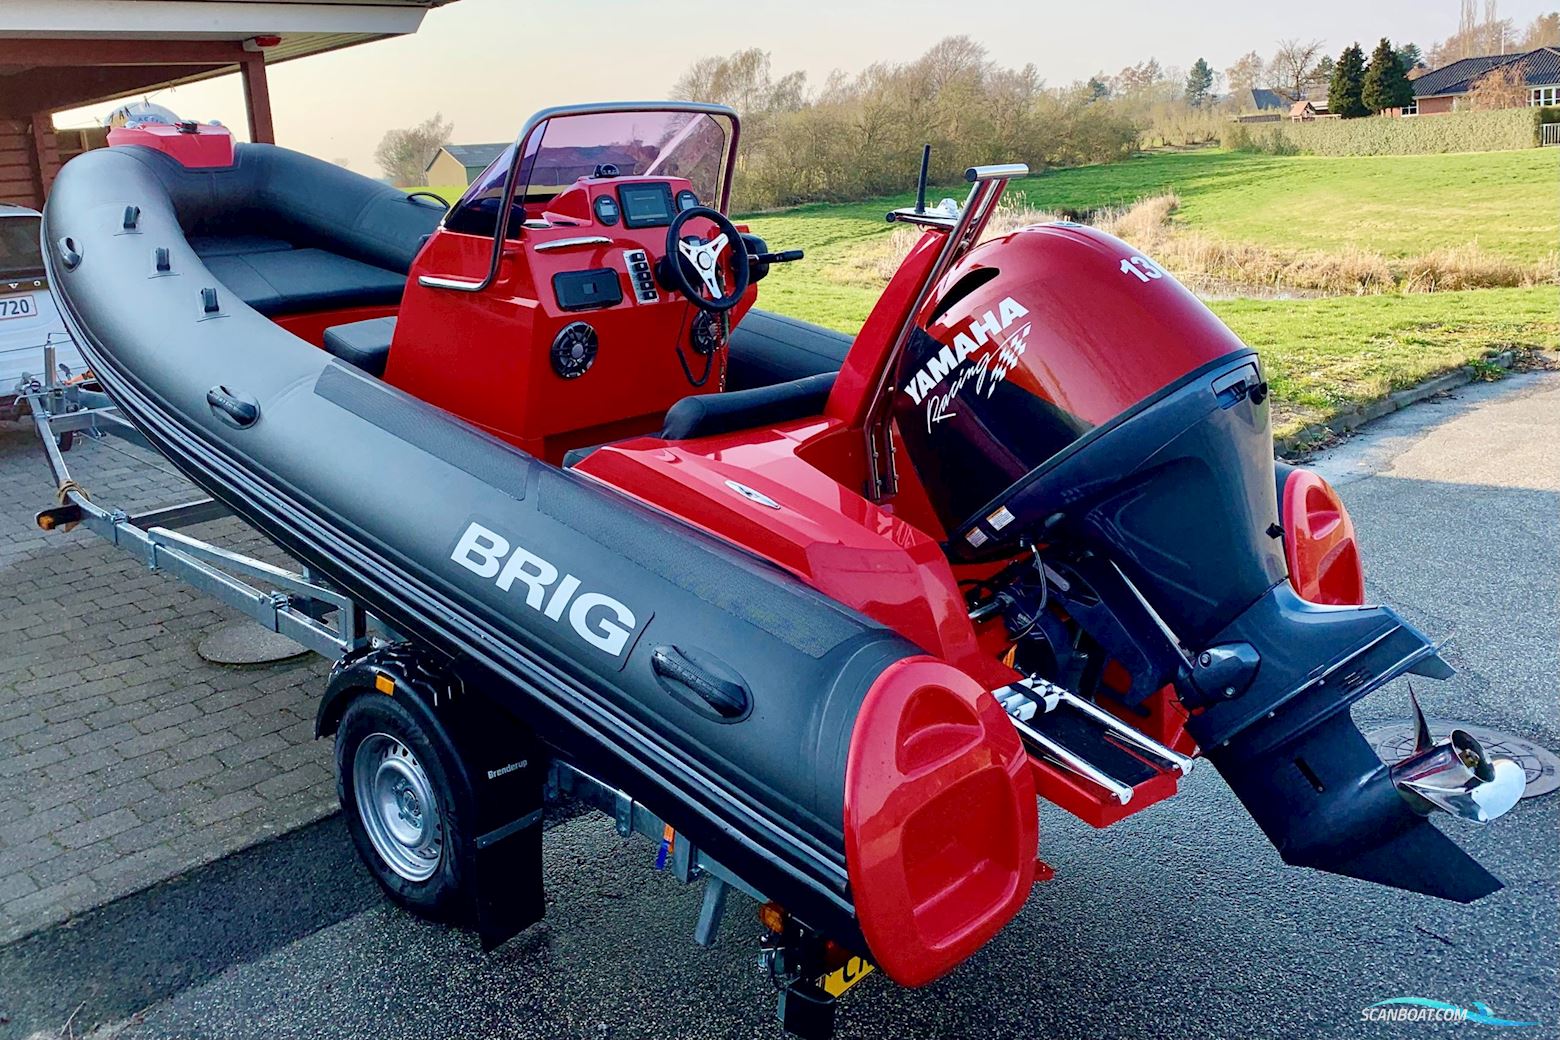 Brig E5 Eagle Luksus Rib Inflatable / Rib 2019, with Yamaha F130Aetl engine, Denmark